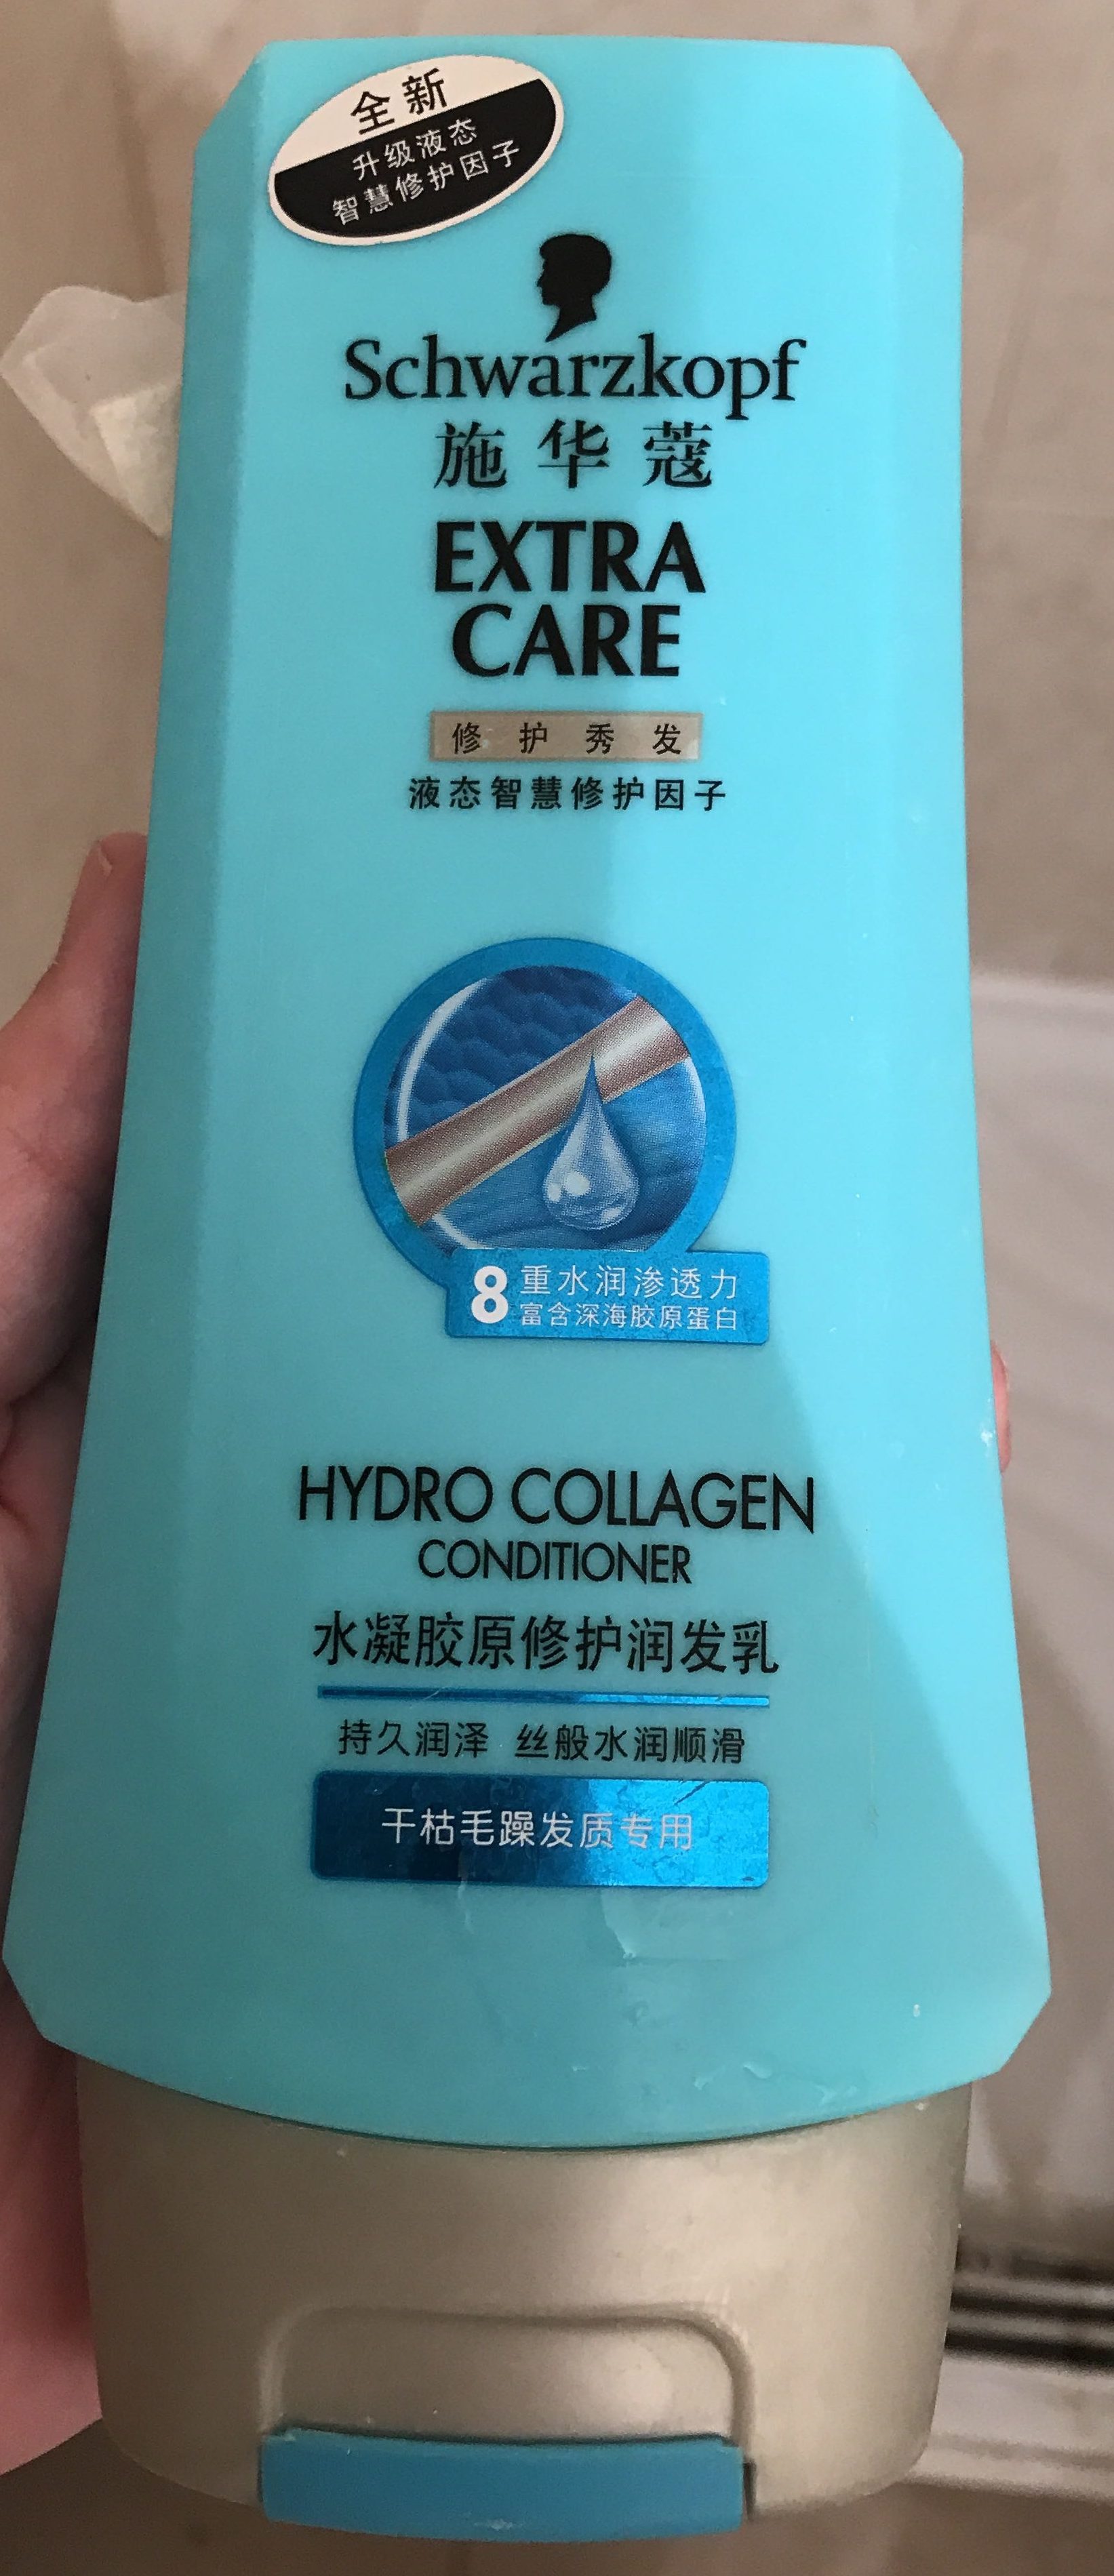 Extra Care 修护润发 Hydro Collagen Conditioner - 製品 - zh